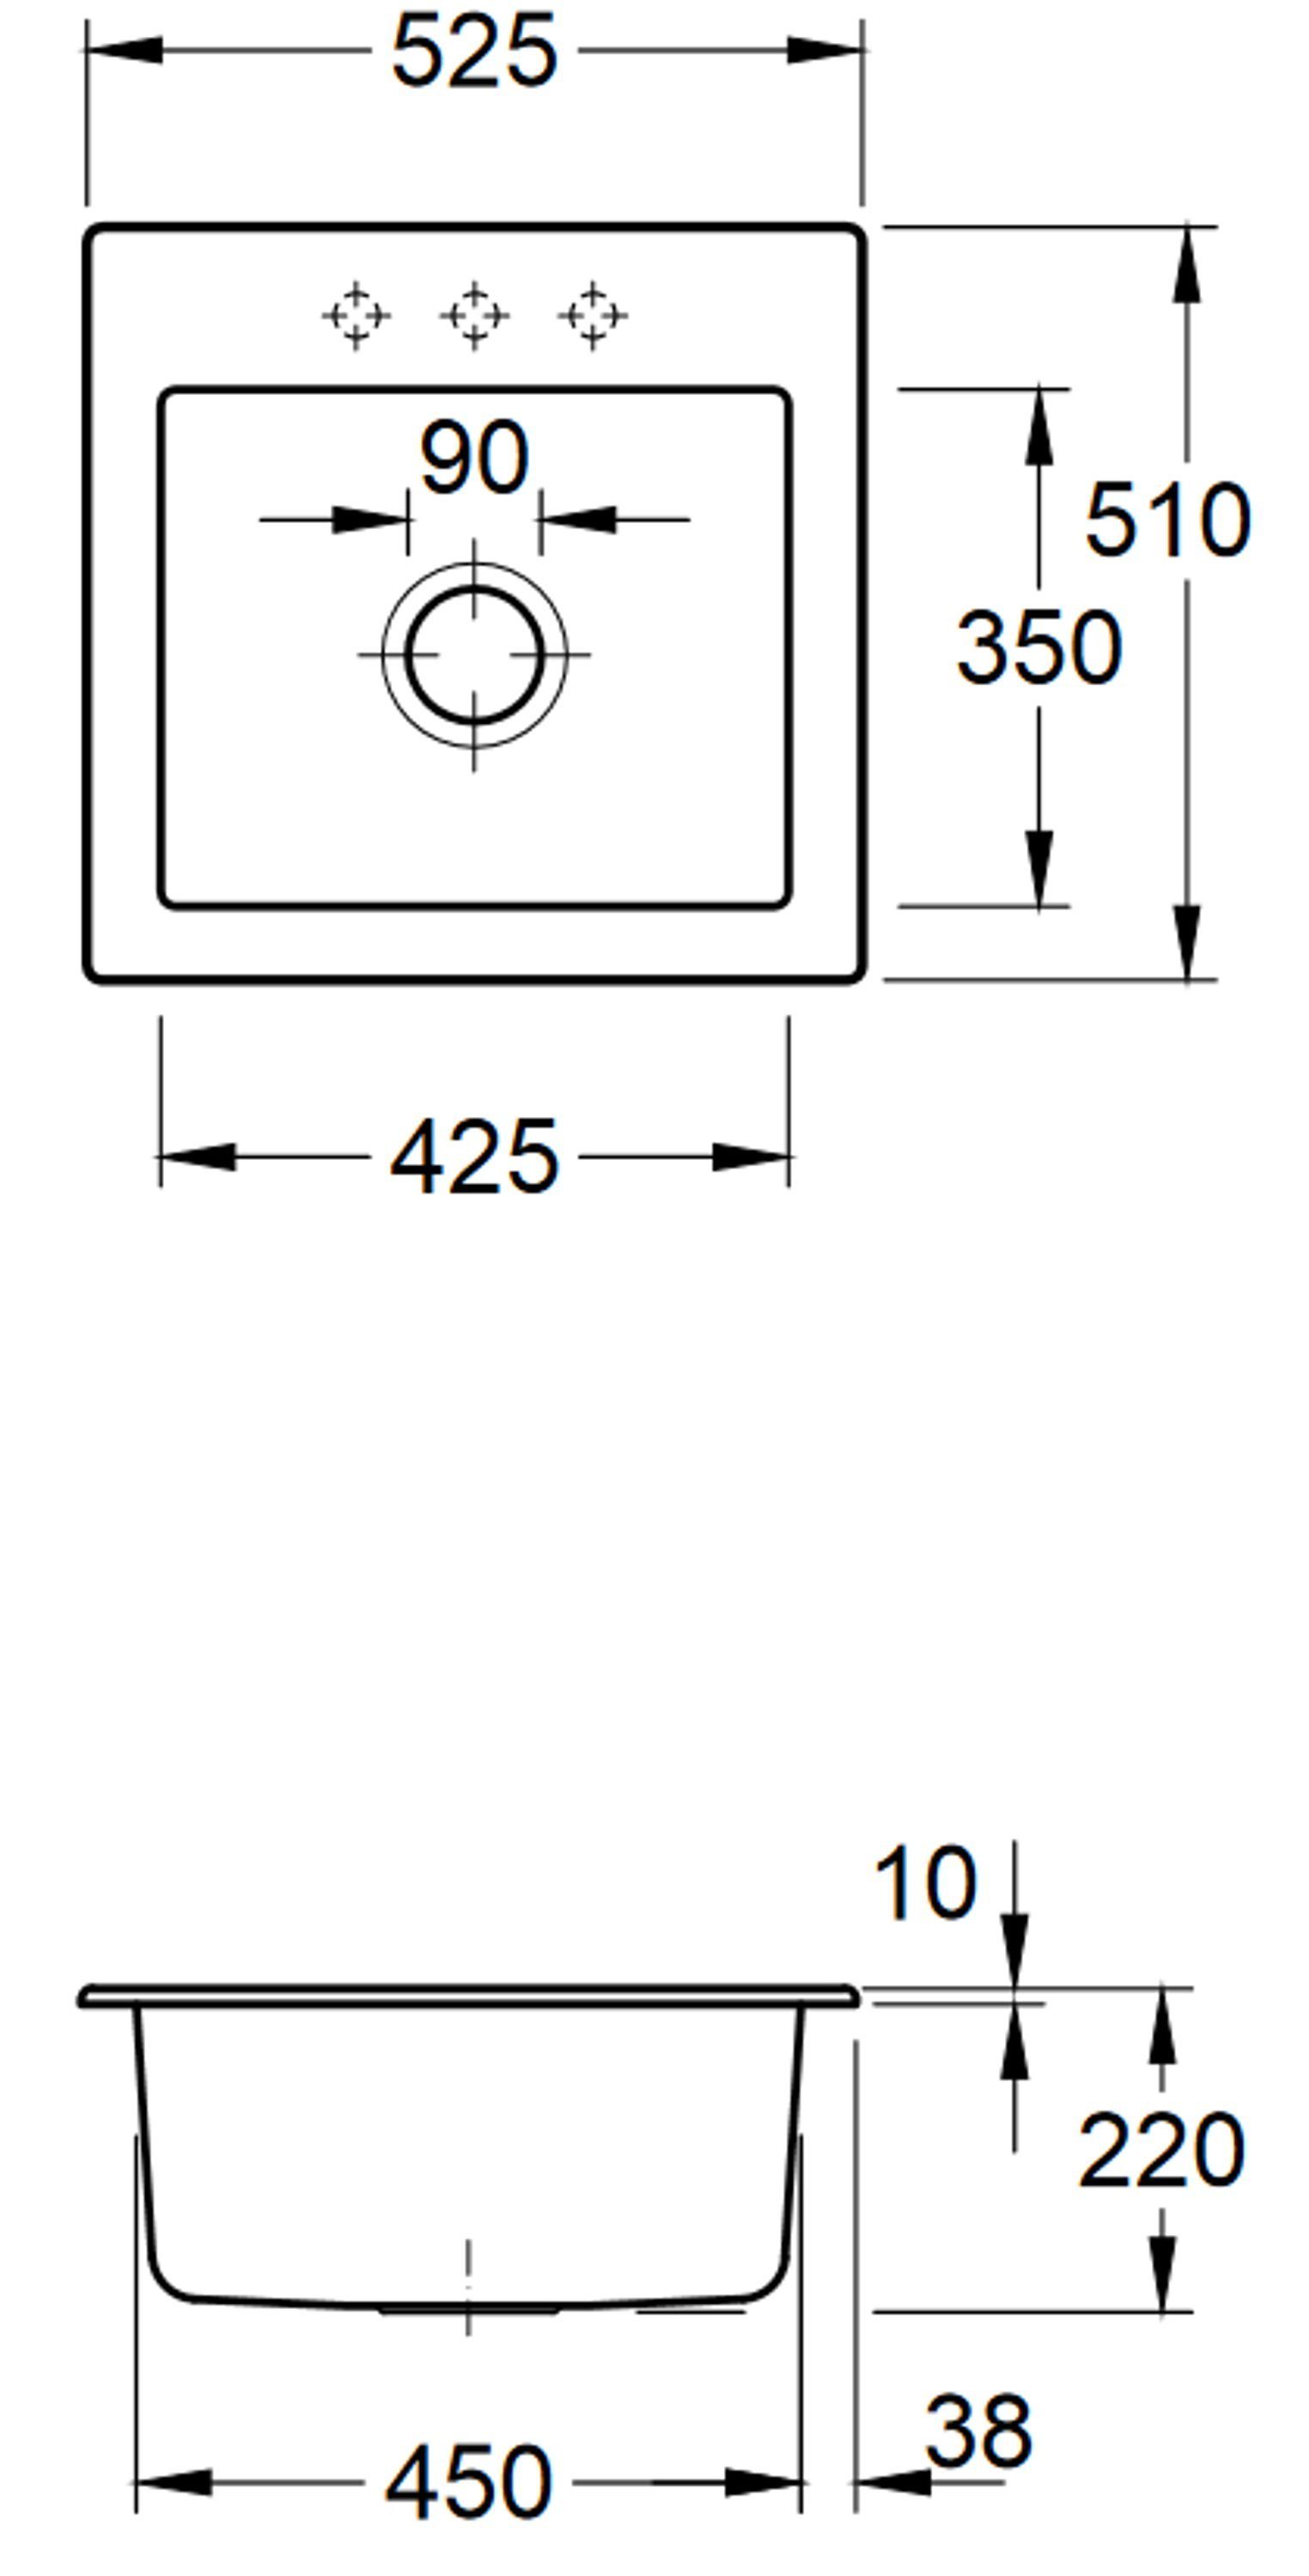 einsetzbar, 3315 cm, 01 52.5/22 Küchenspüle Dampfgarschalen Villeroy Boch Geschmacksmuster Rechteckig, geschützt Serie, Subway SM, &